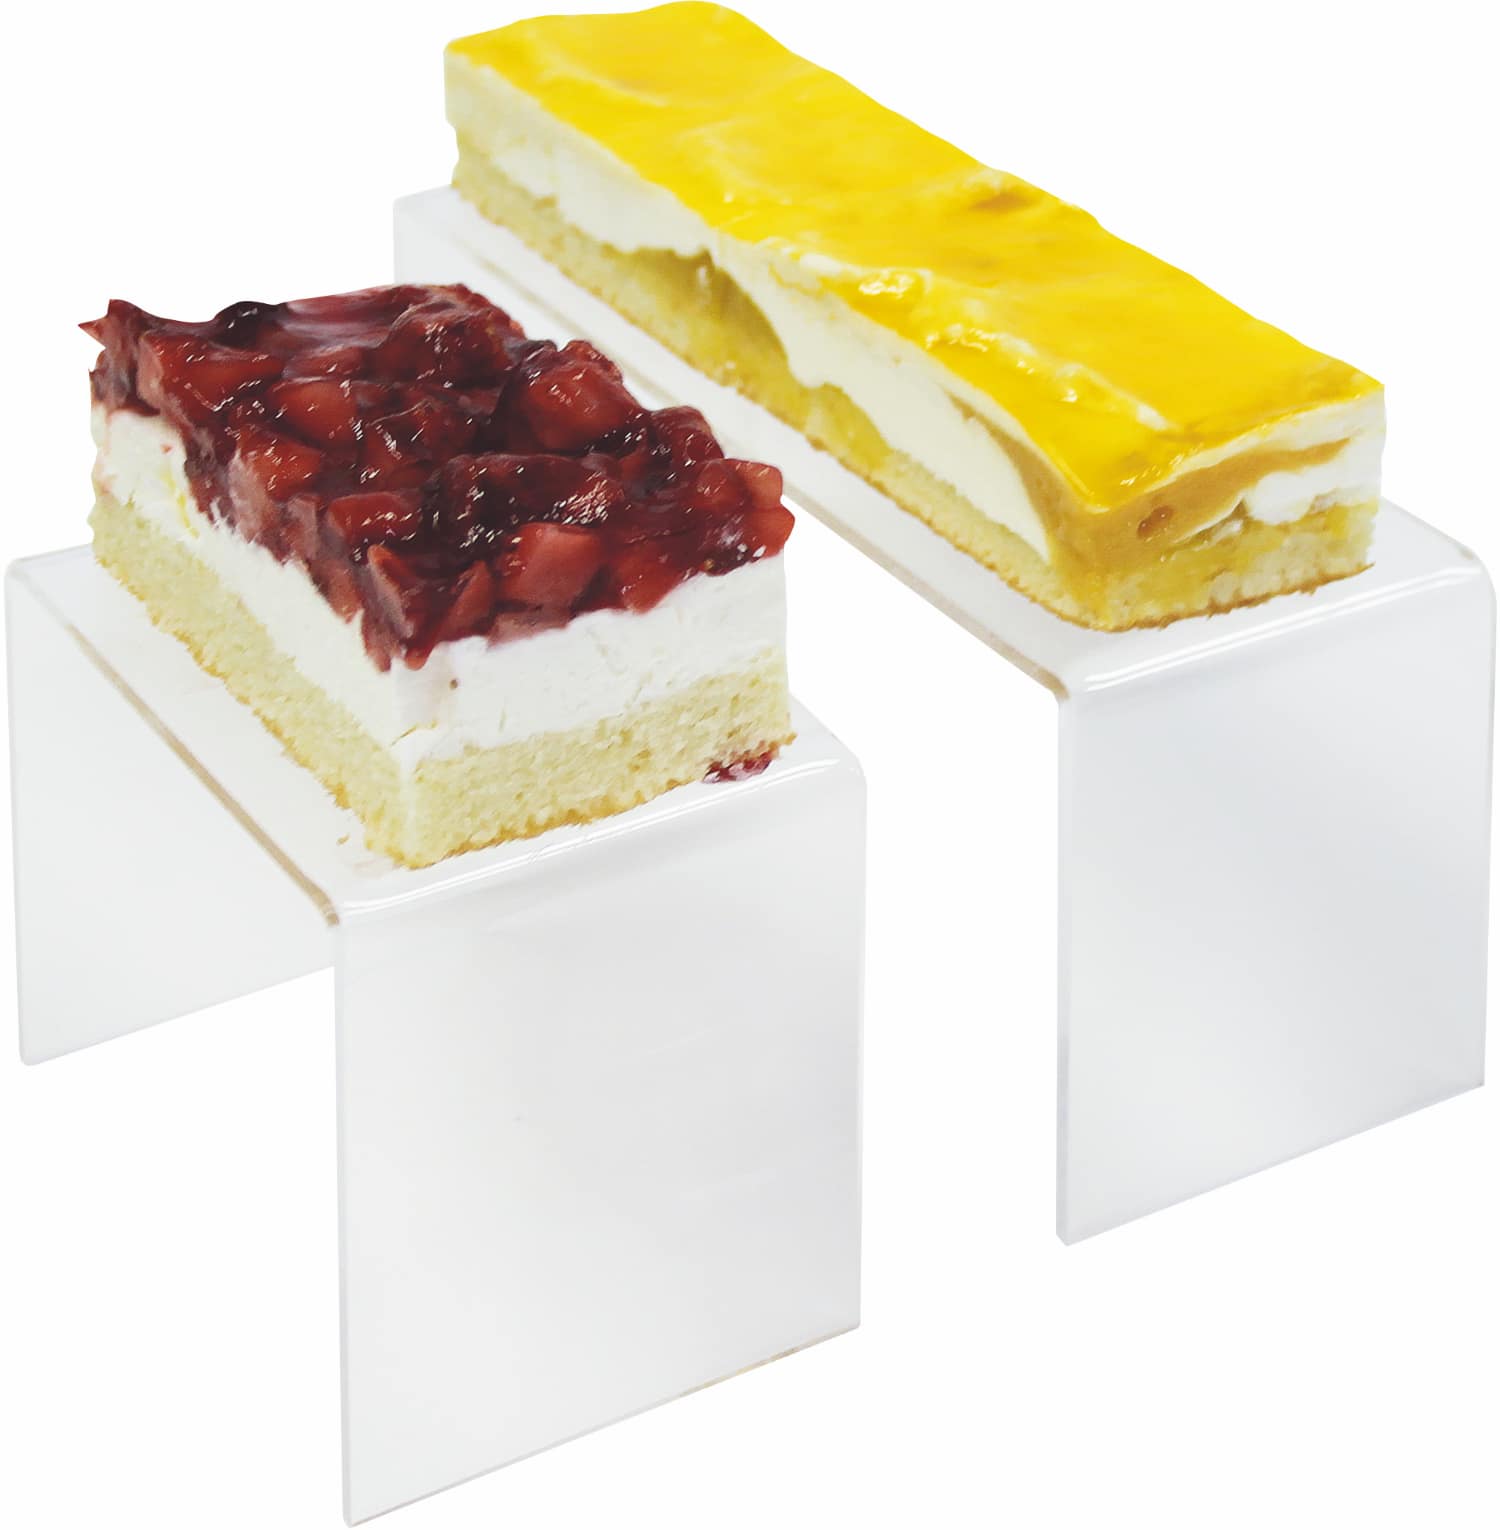 Display riser for sliced cakes